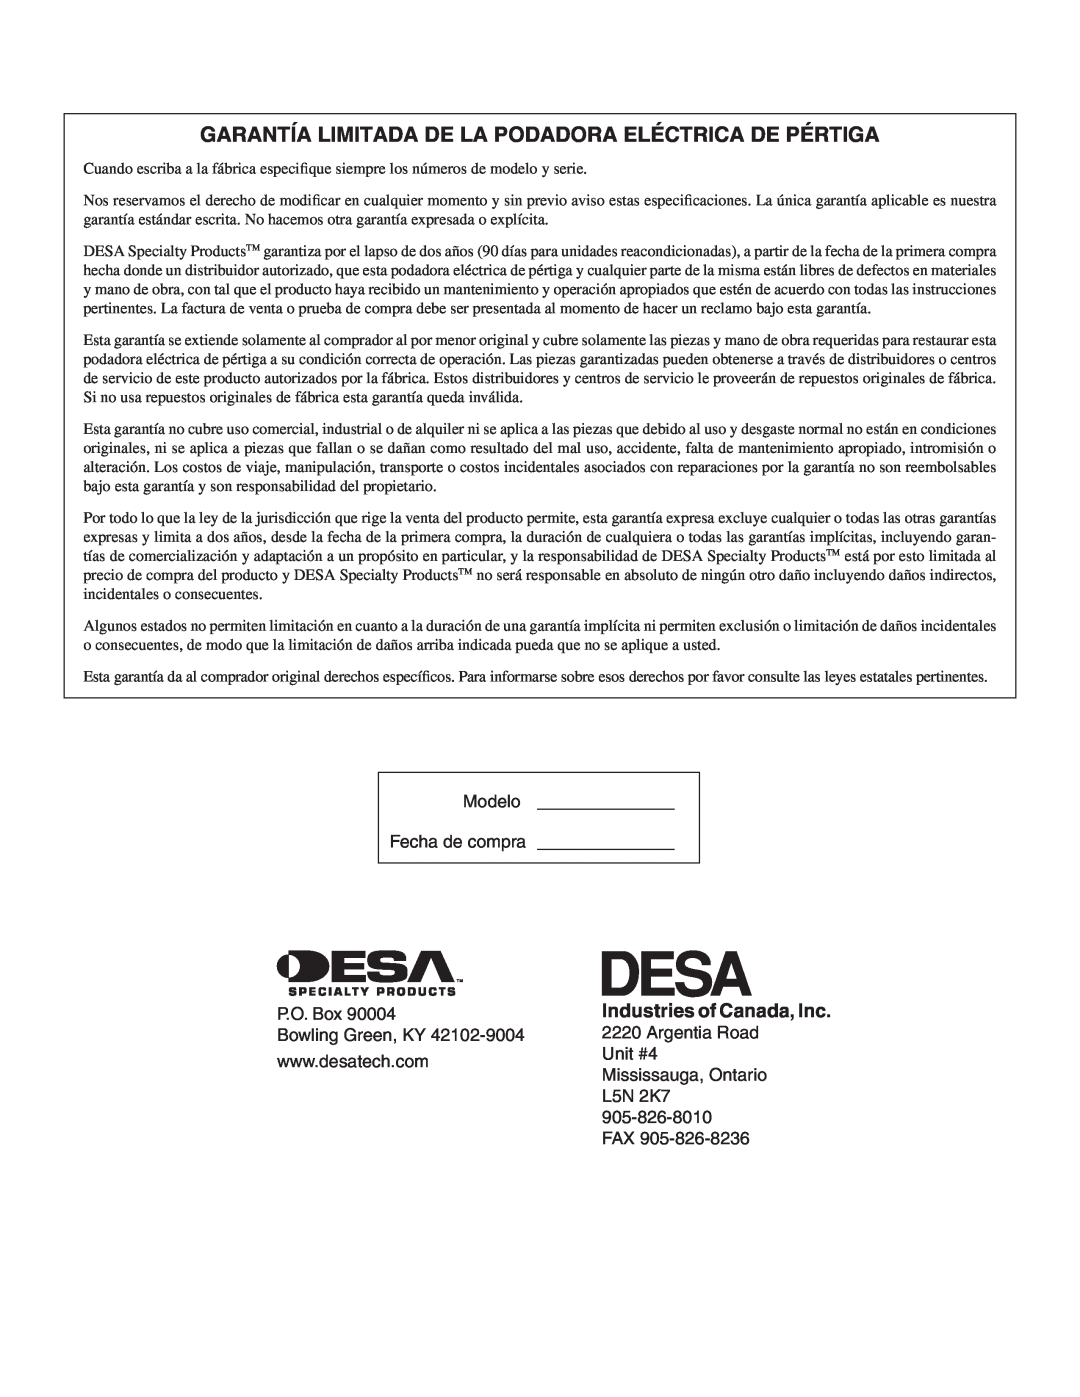 Desa 110946-01A owner manual Garantía Limitada De La Podadora Eléctrica De Pértiga, Industries of Canada, Inc 